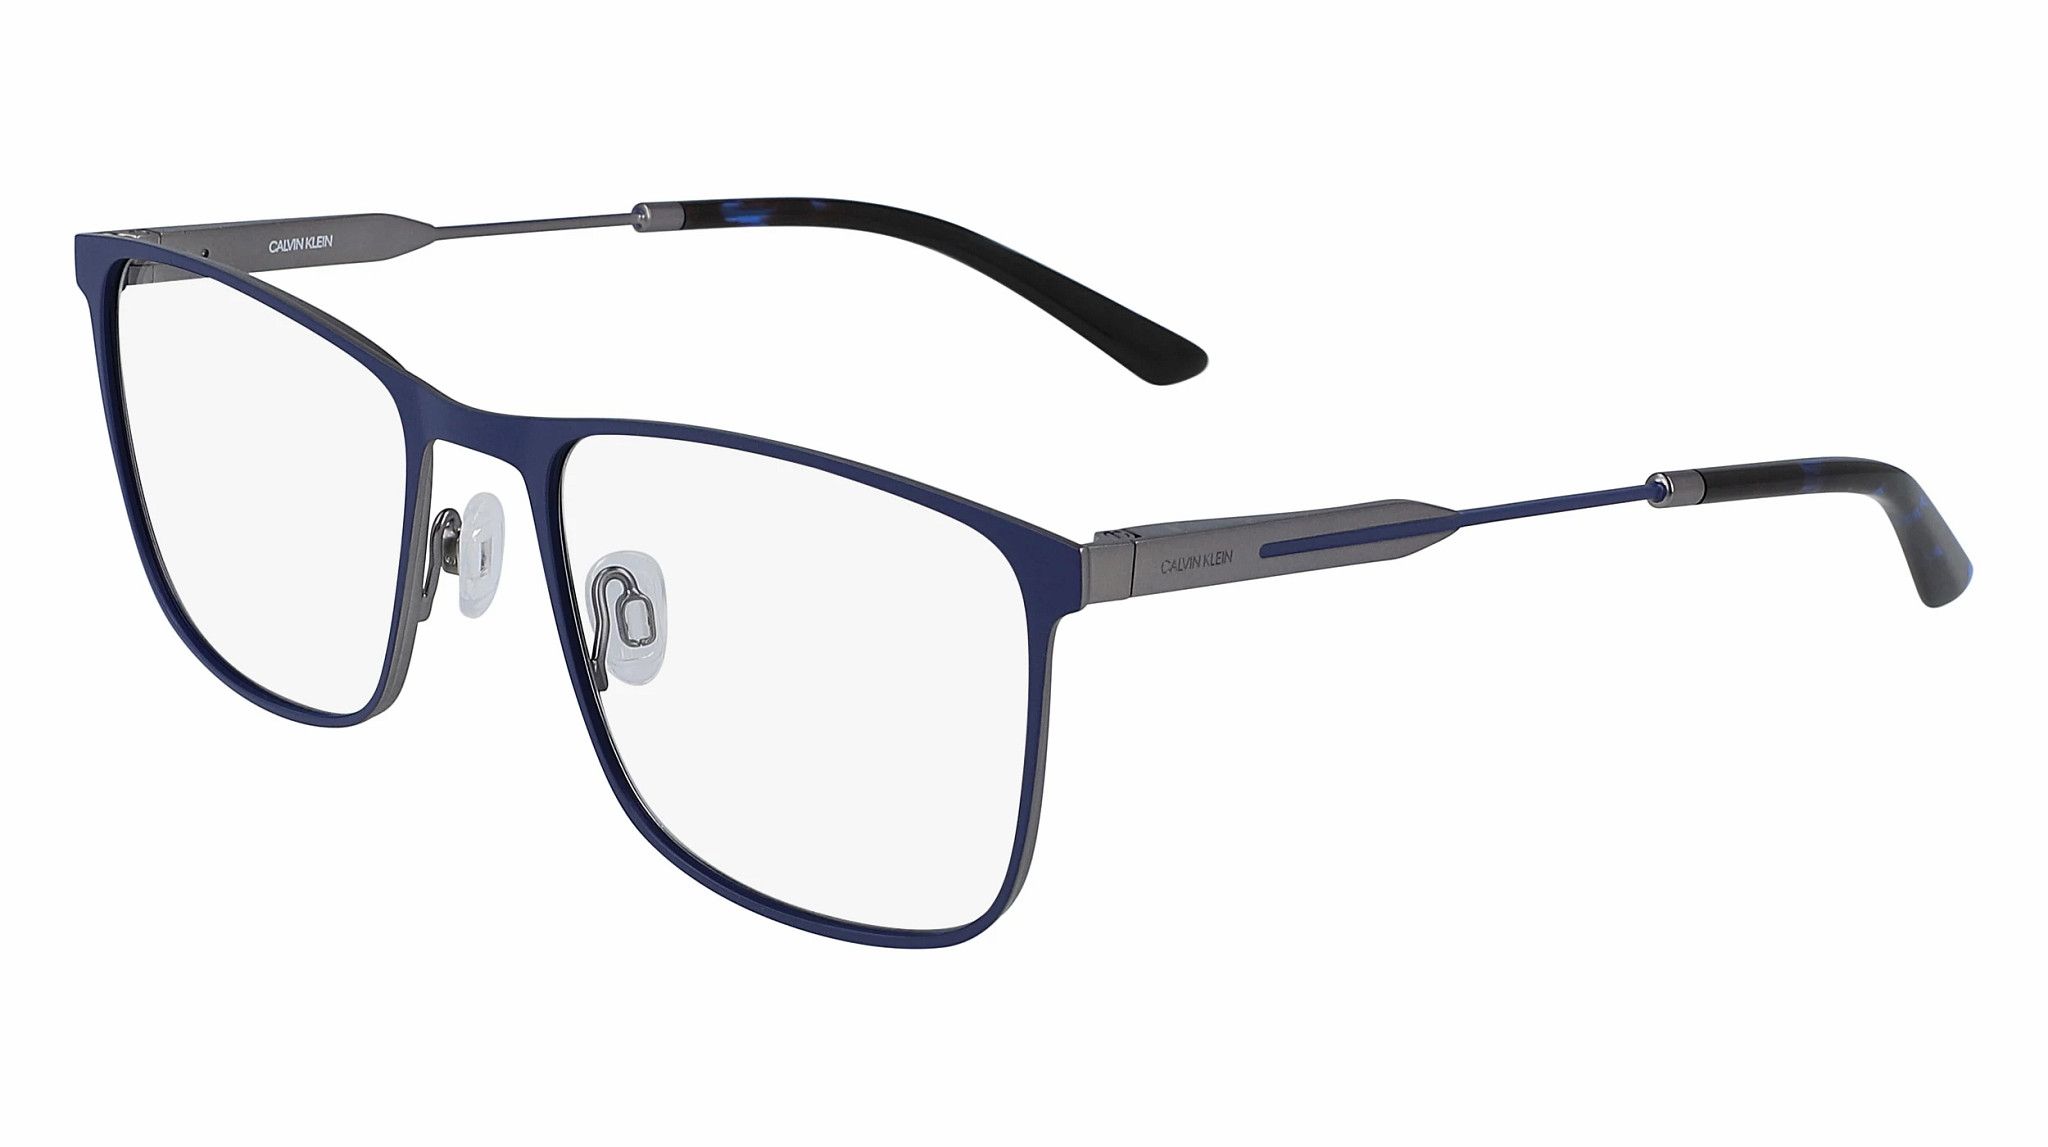 Eyewear - Glasses - Sunglasses | Eyelines Optometrists